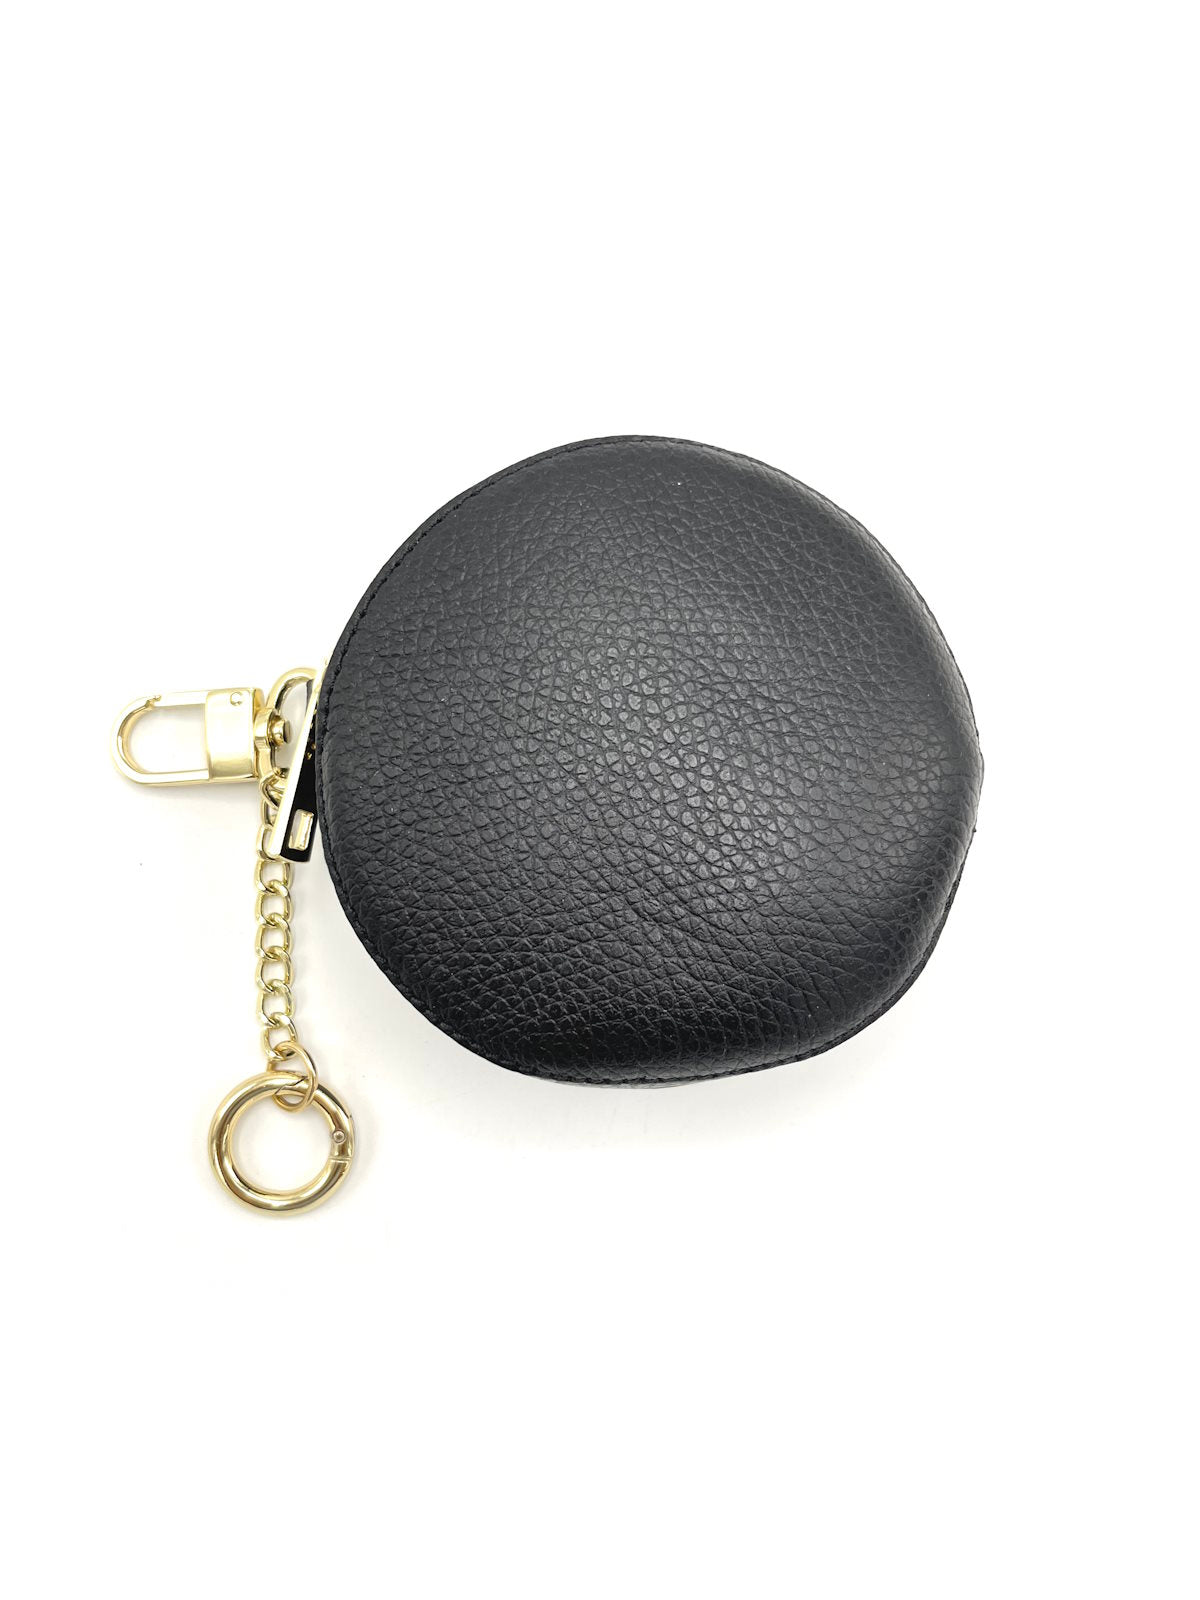 Genuine leather detachable purse with key holder, art. 342701.342